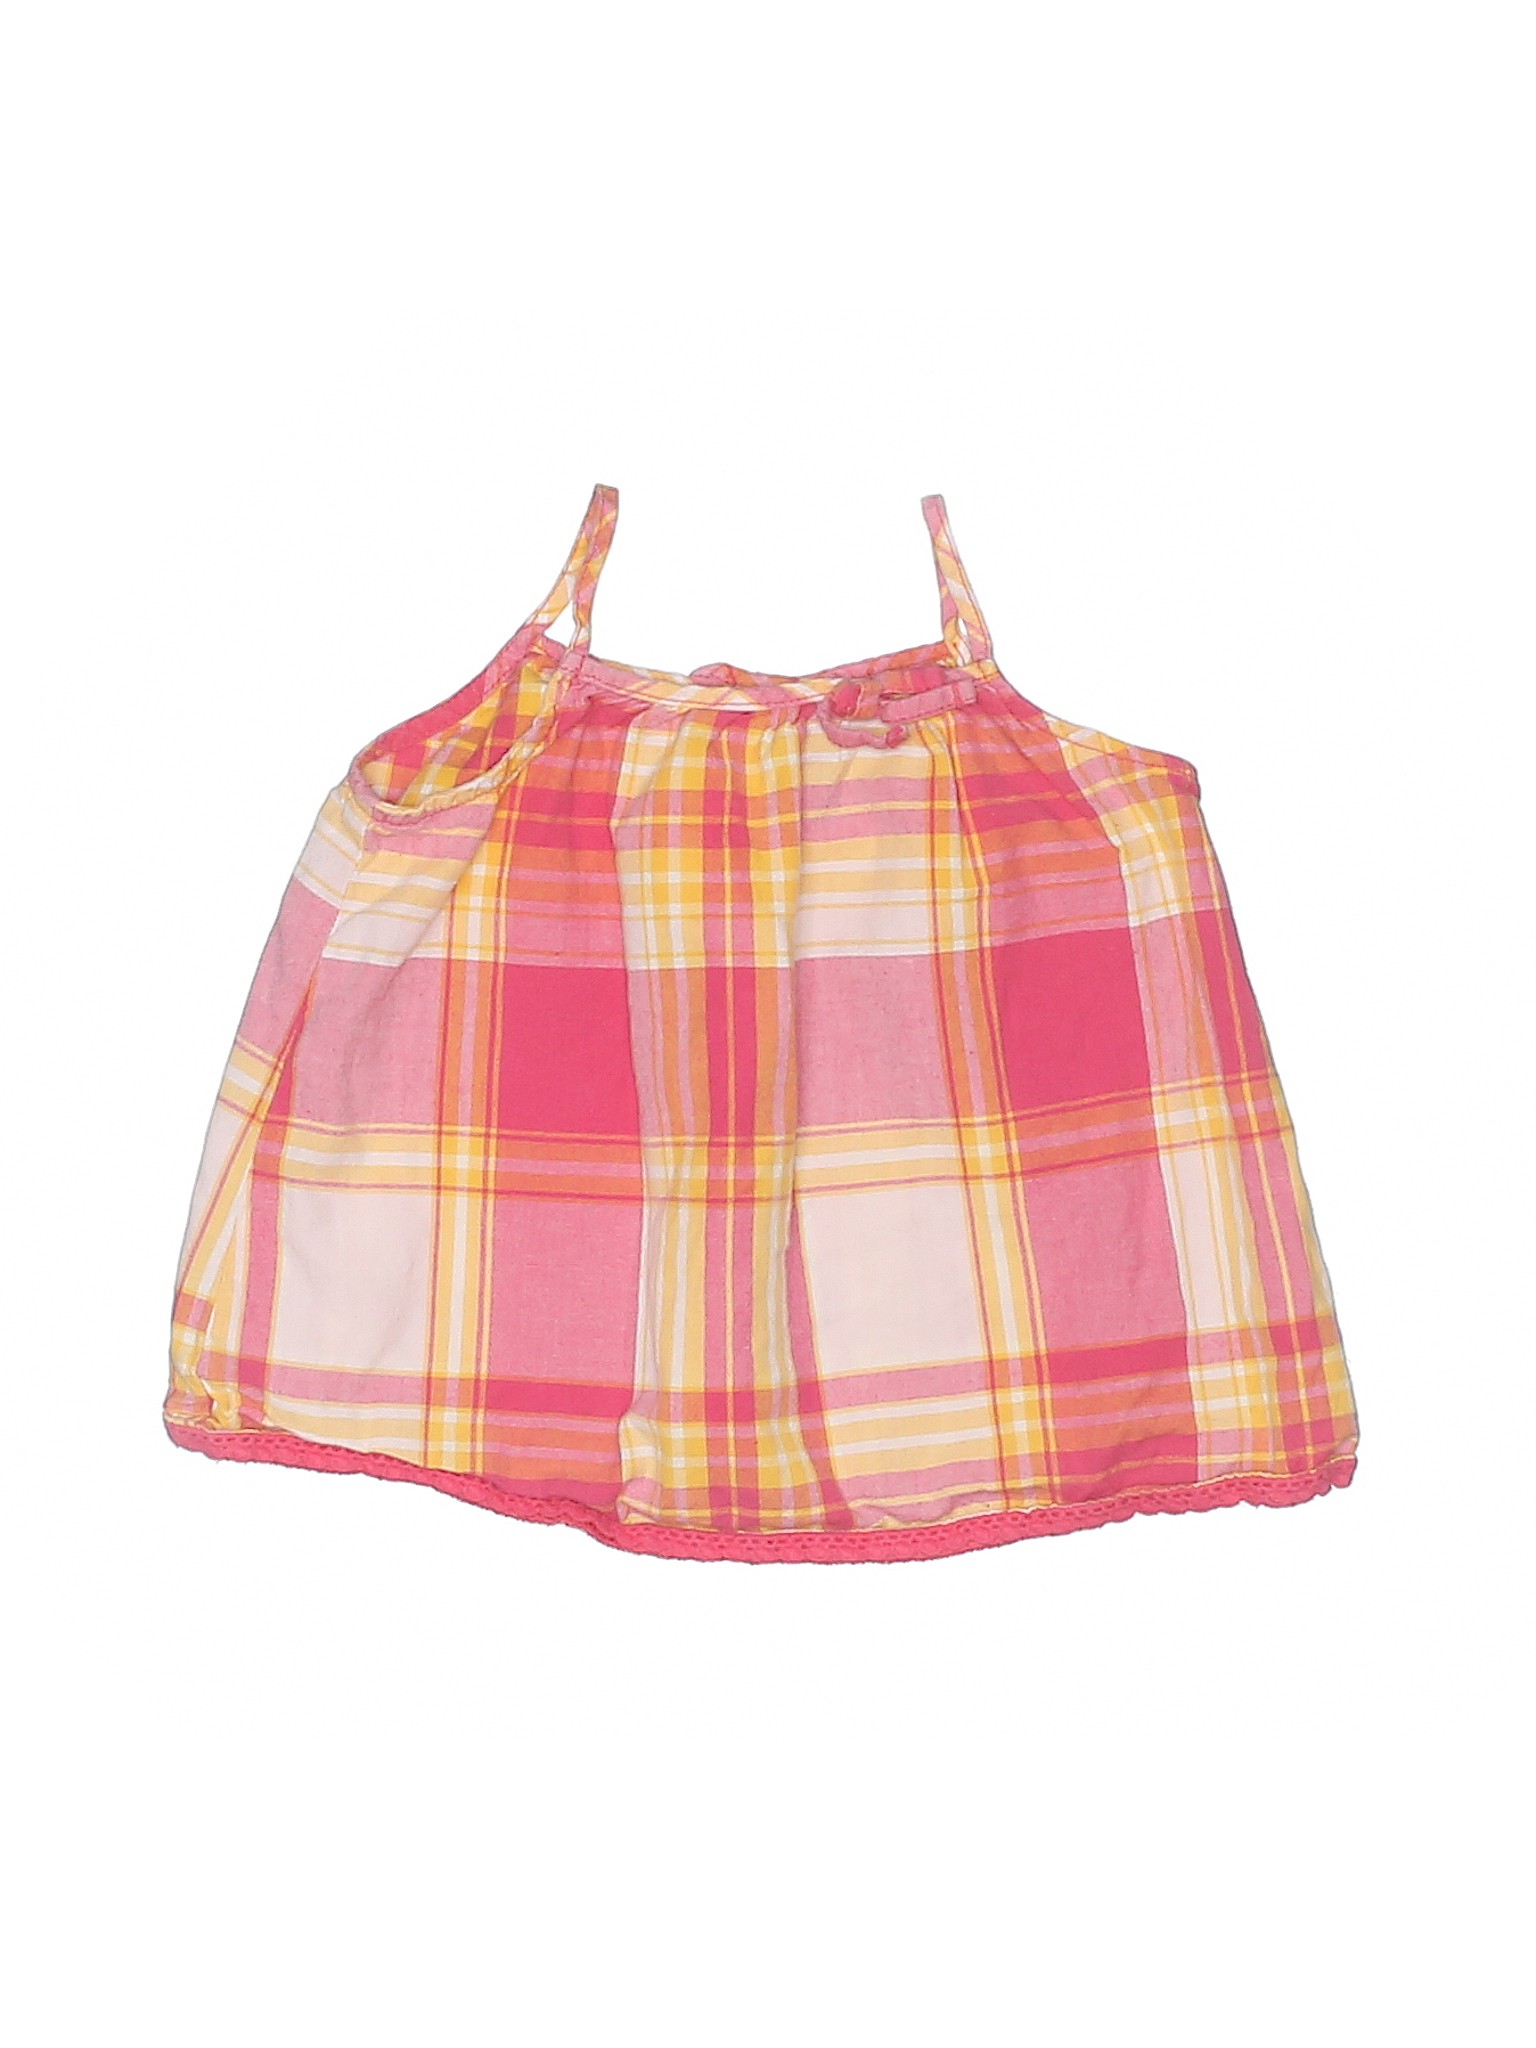 Baby Gap Girls Pink Sleeveless Blouse 12-18 Months | eBay